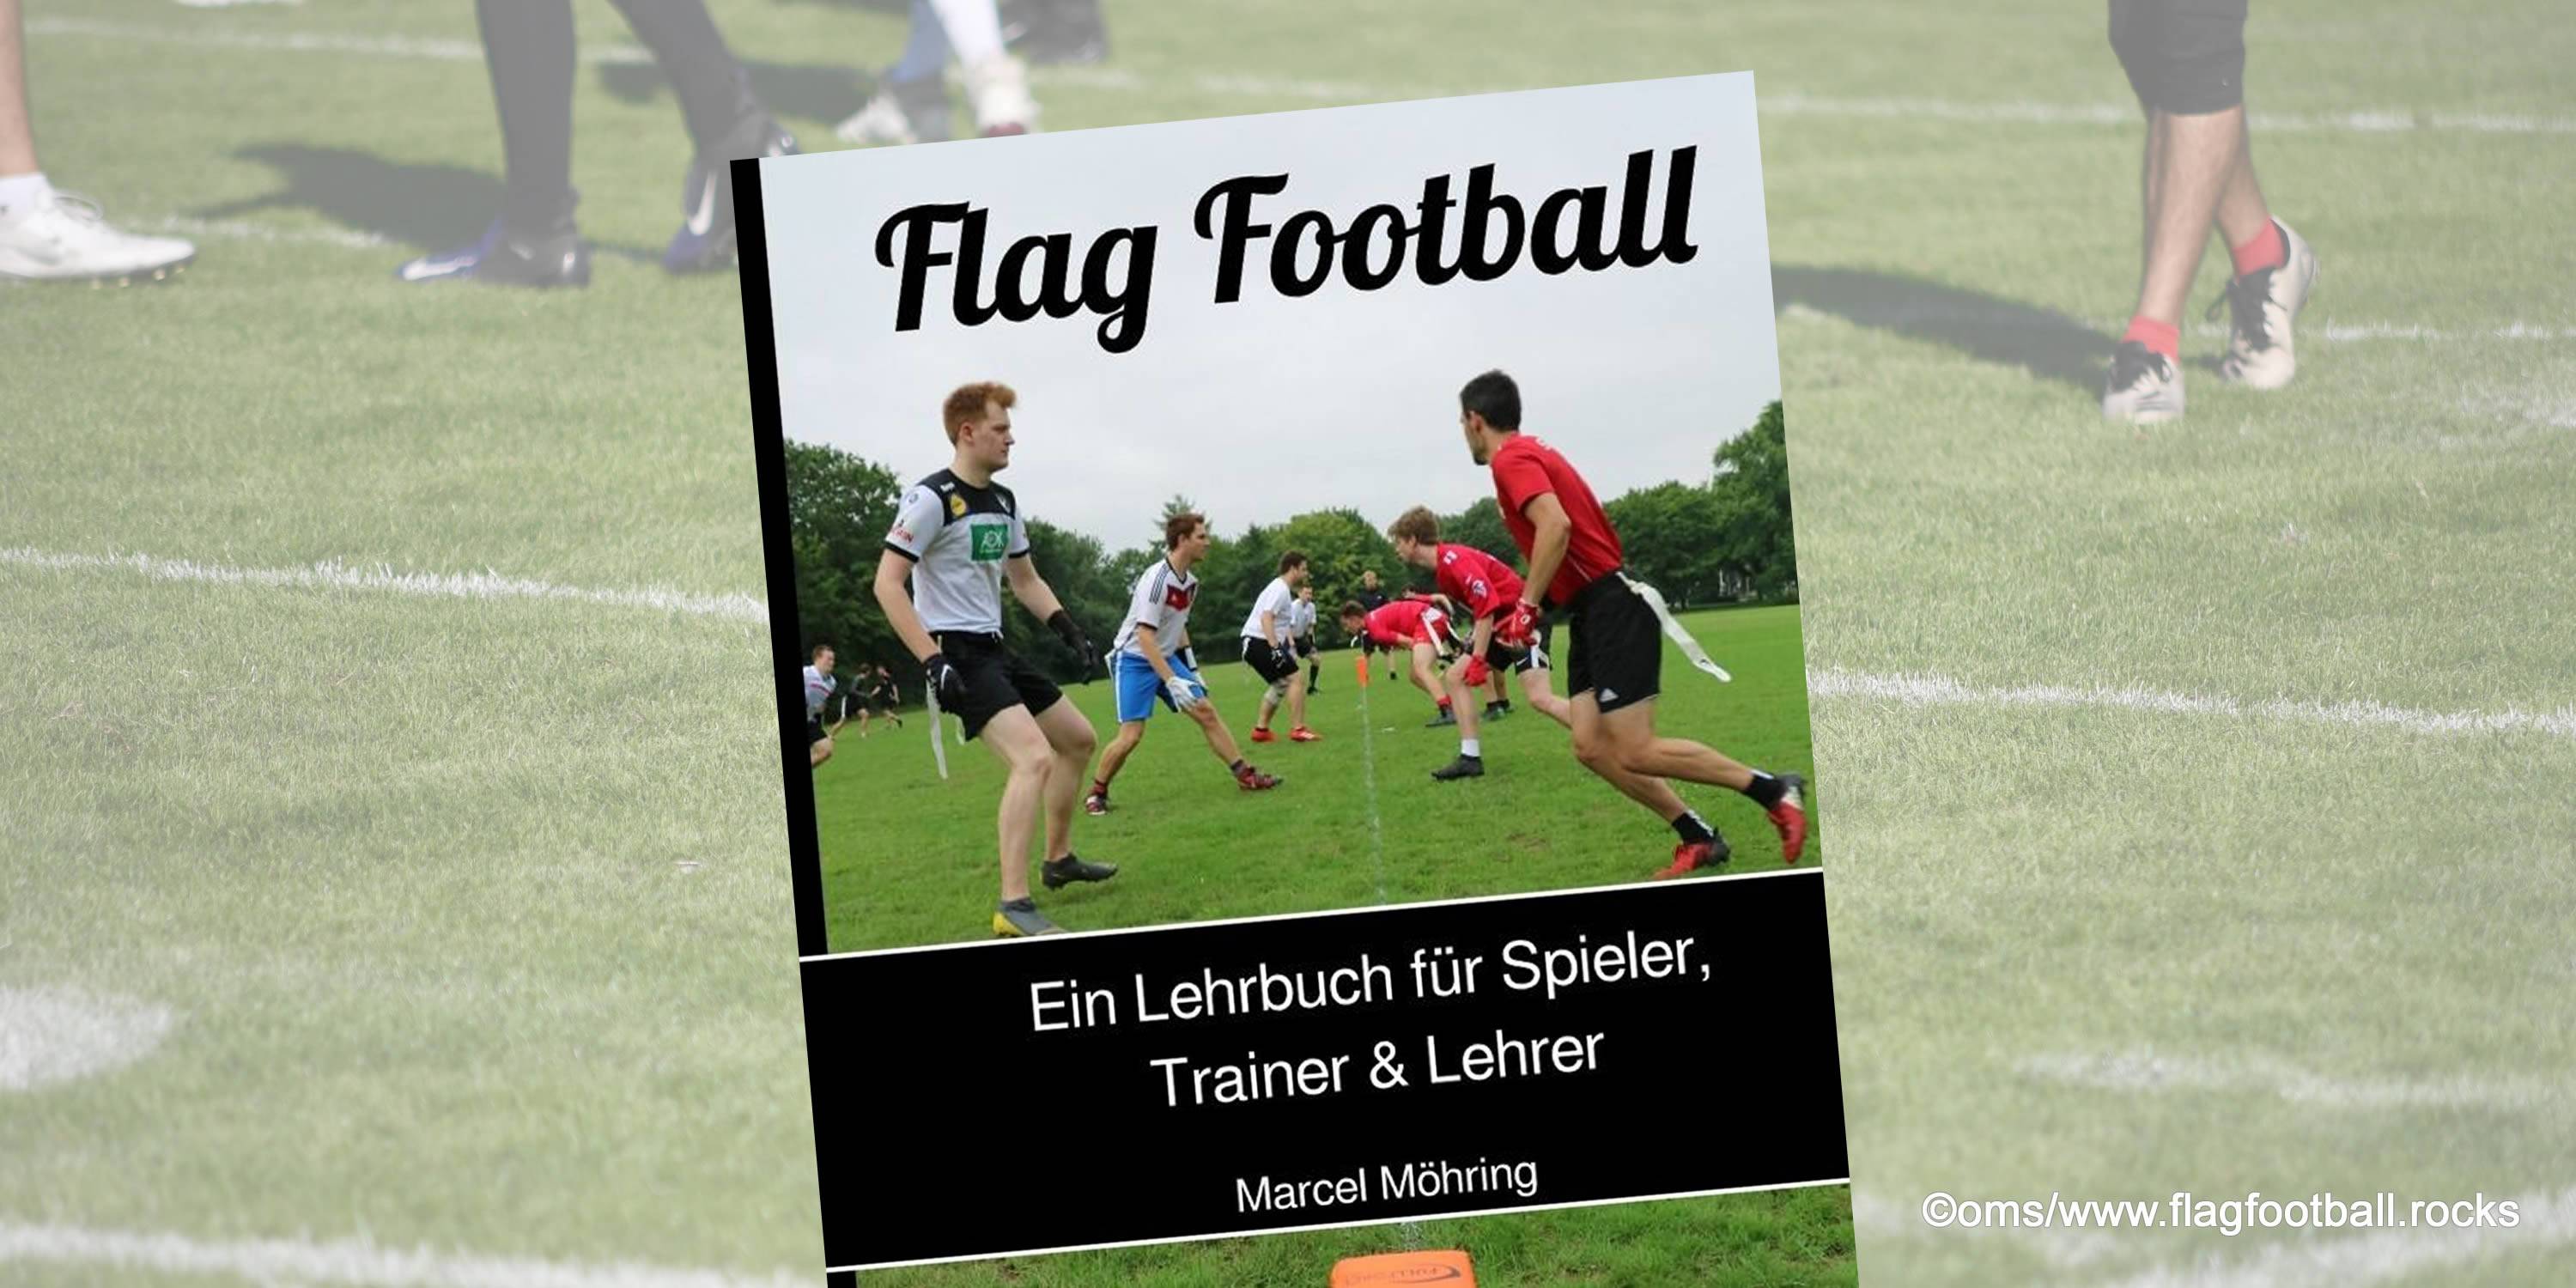 Buchvorstellung: "Flag Football" von Marcel Möhring